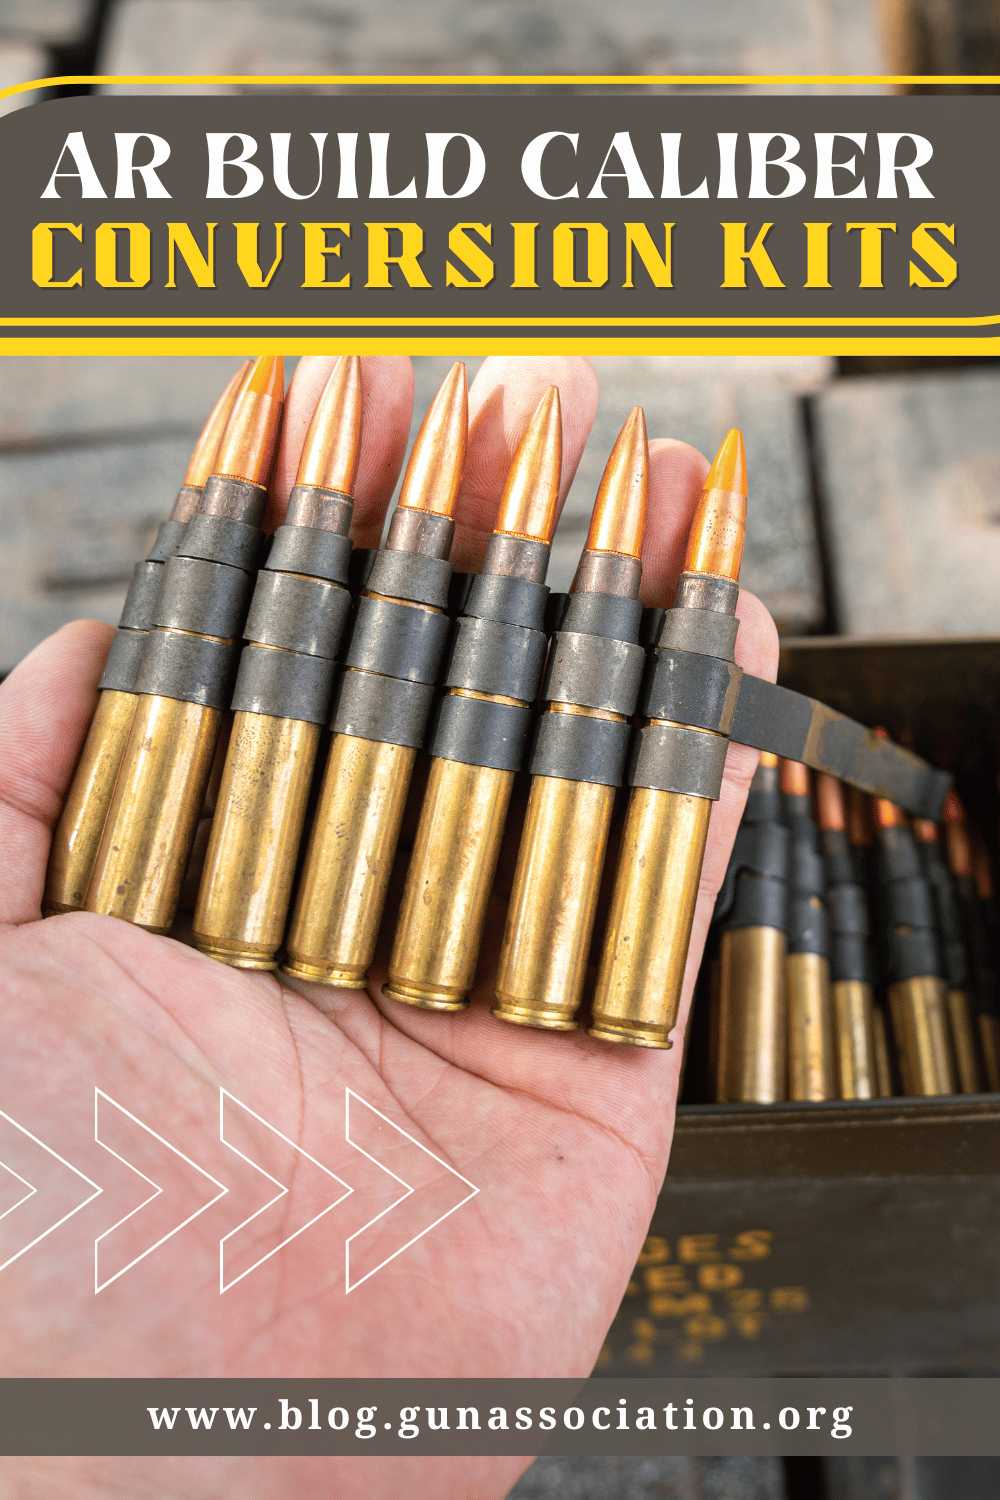 AR build caliber conversion kits